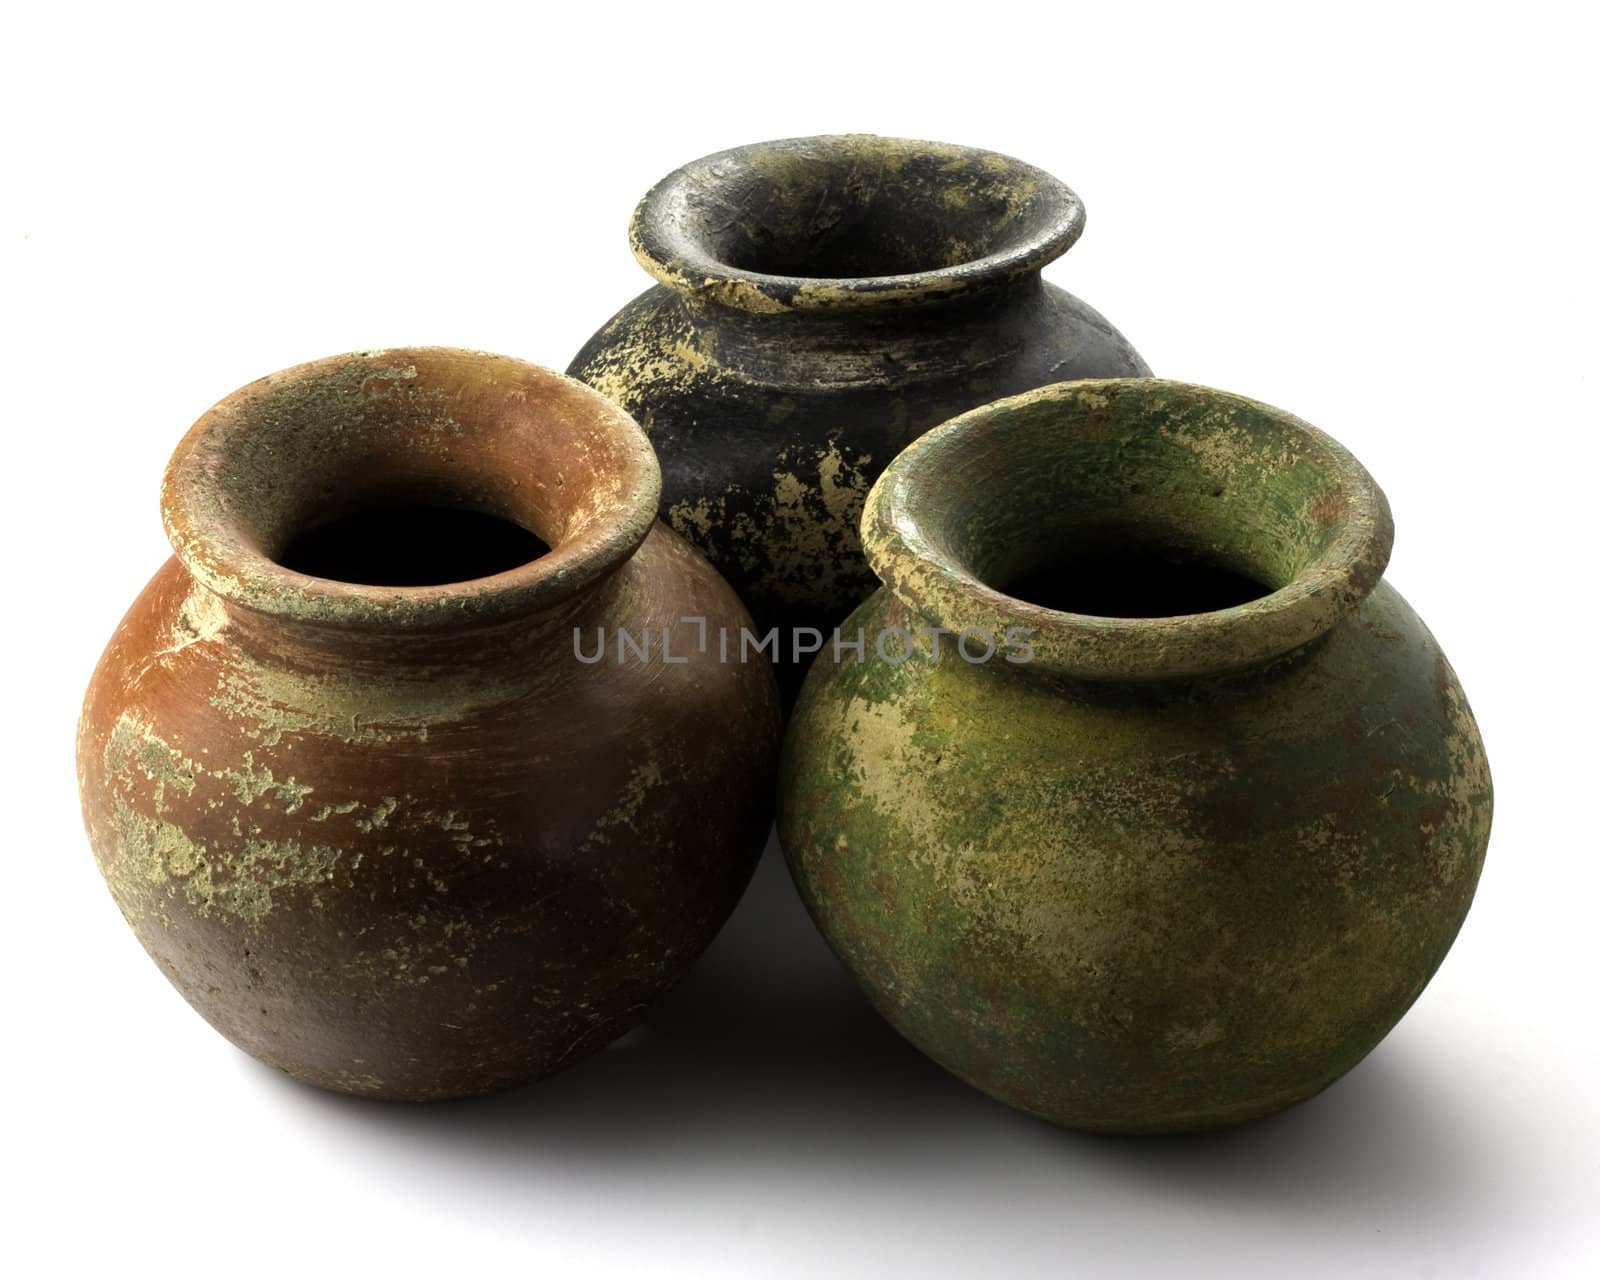 three rough clay plant pots by PixelsAway